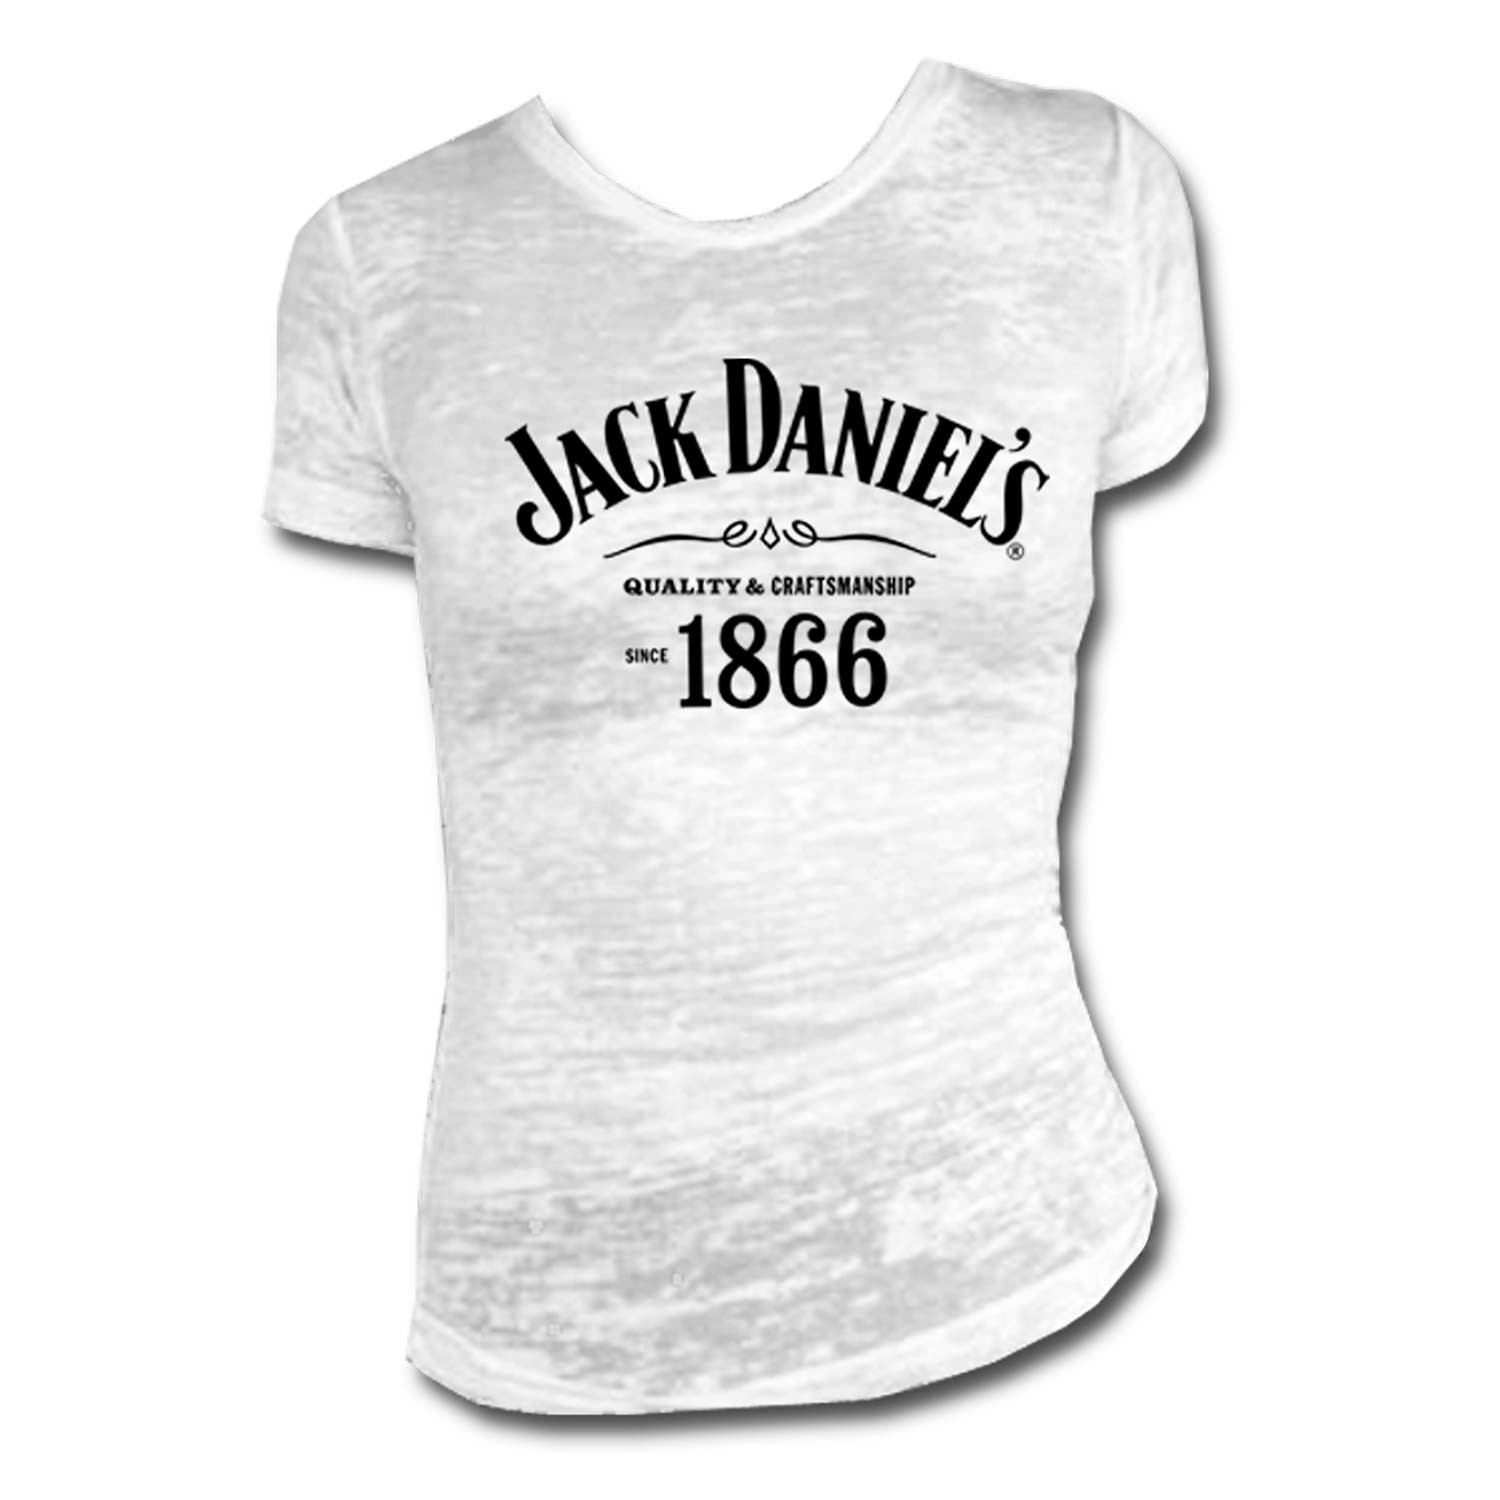 Jack Daniels 1866 Burnout Women's White Tee Shirt